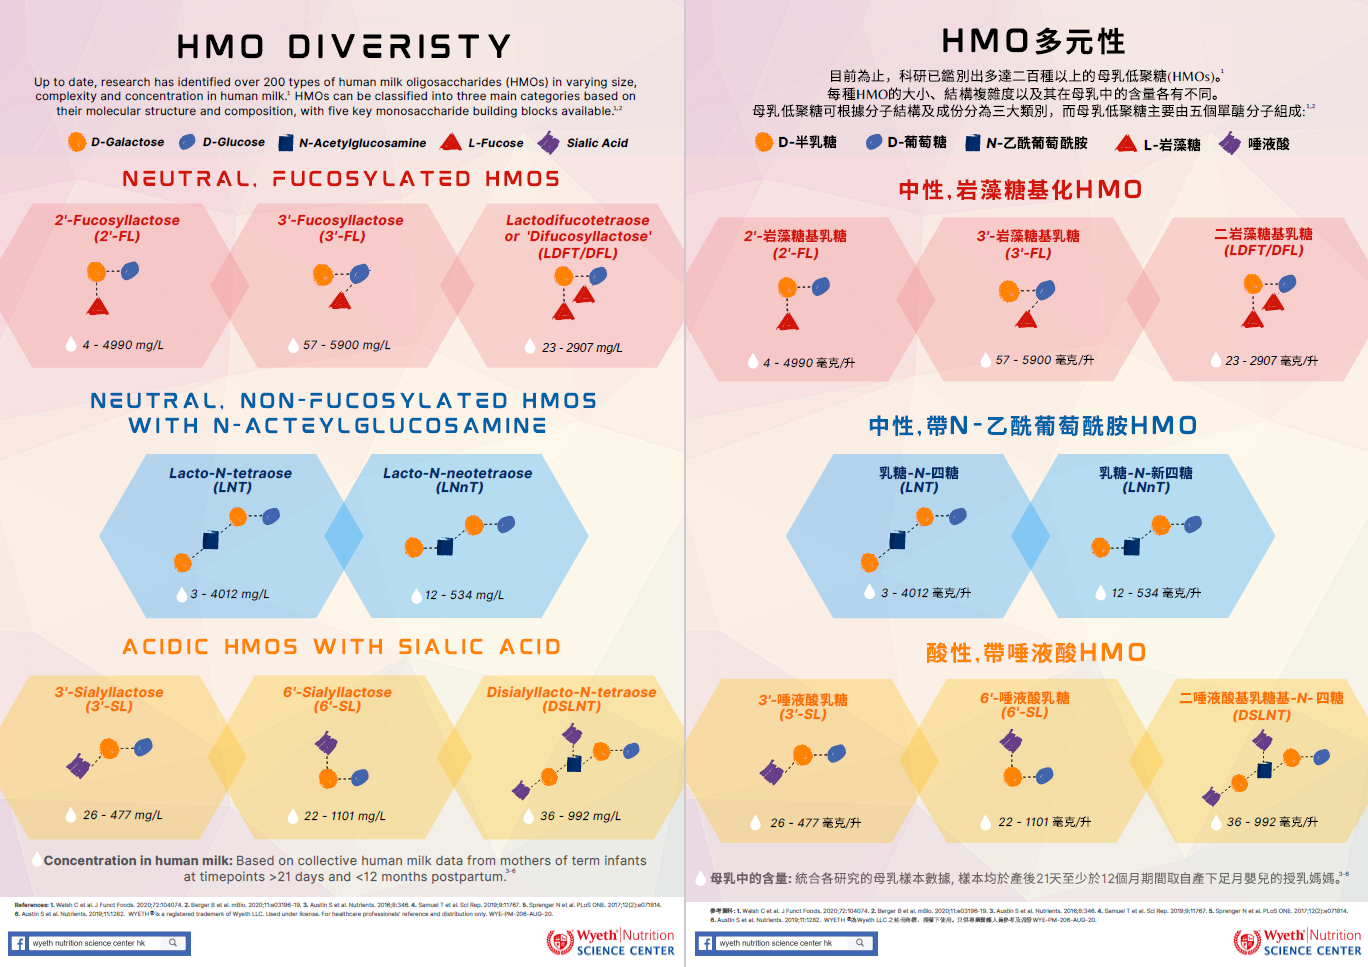 HMO diversity